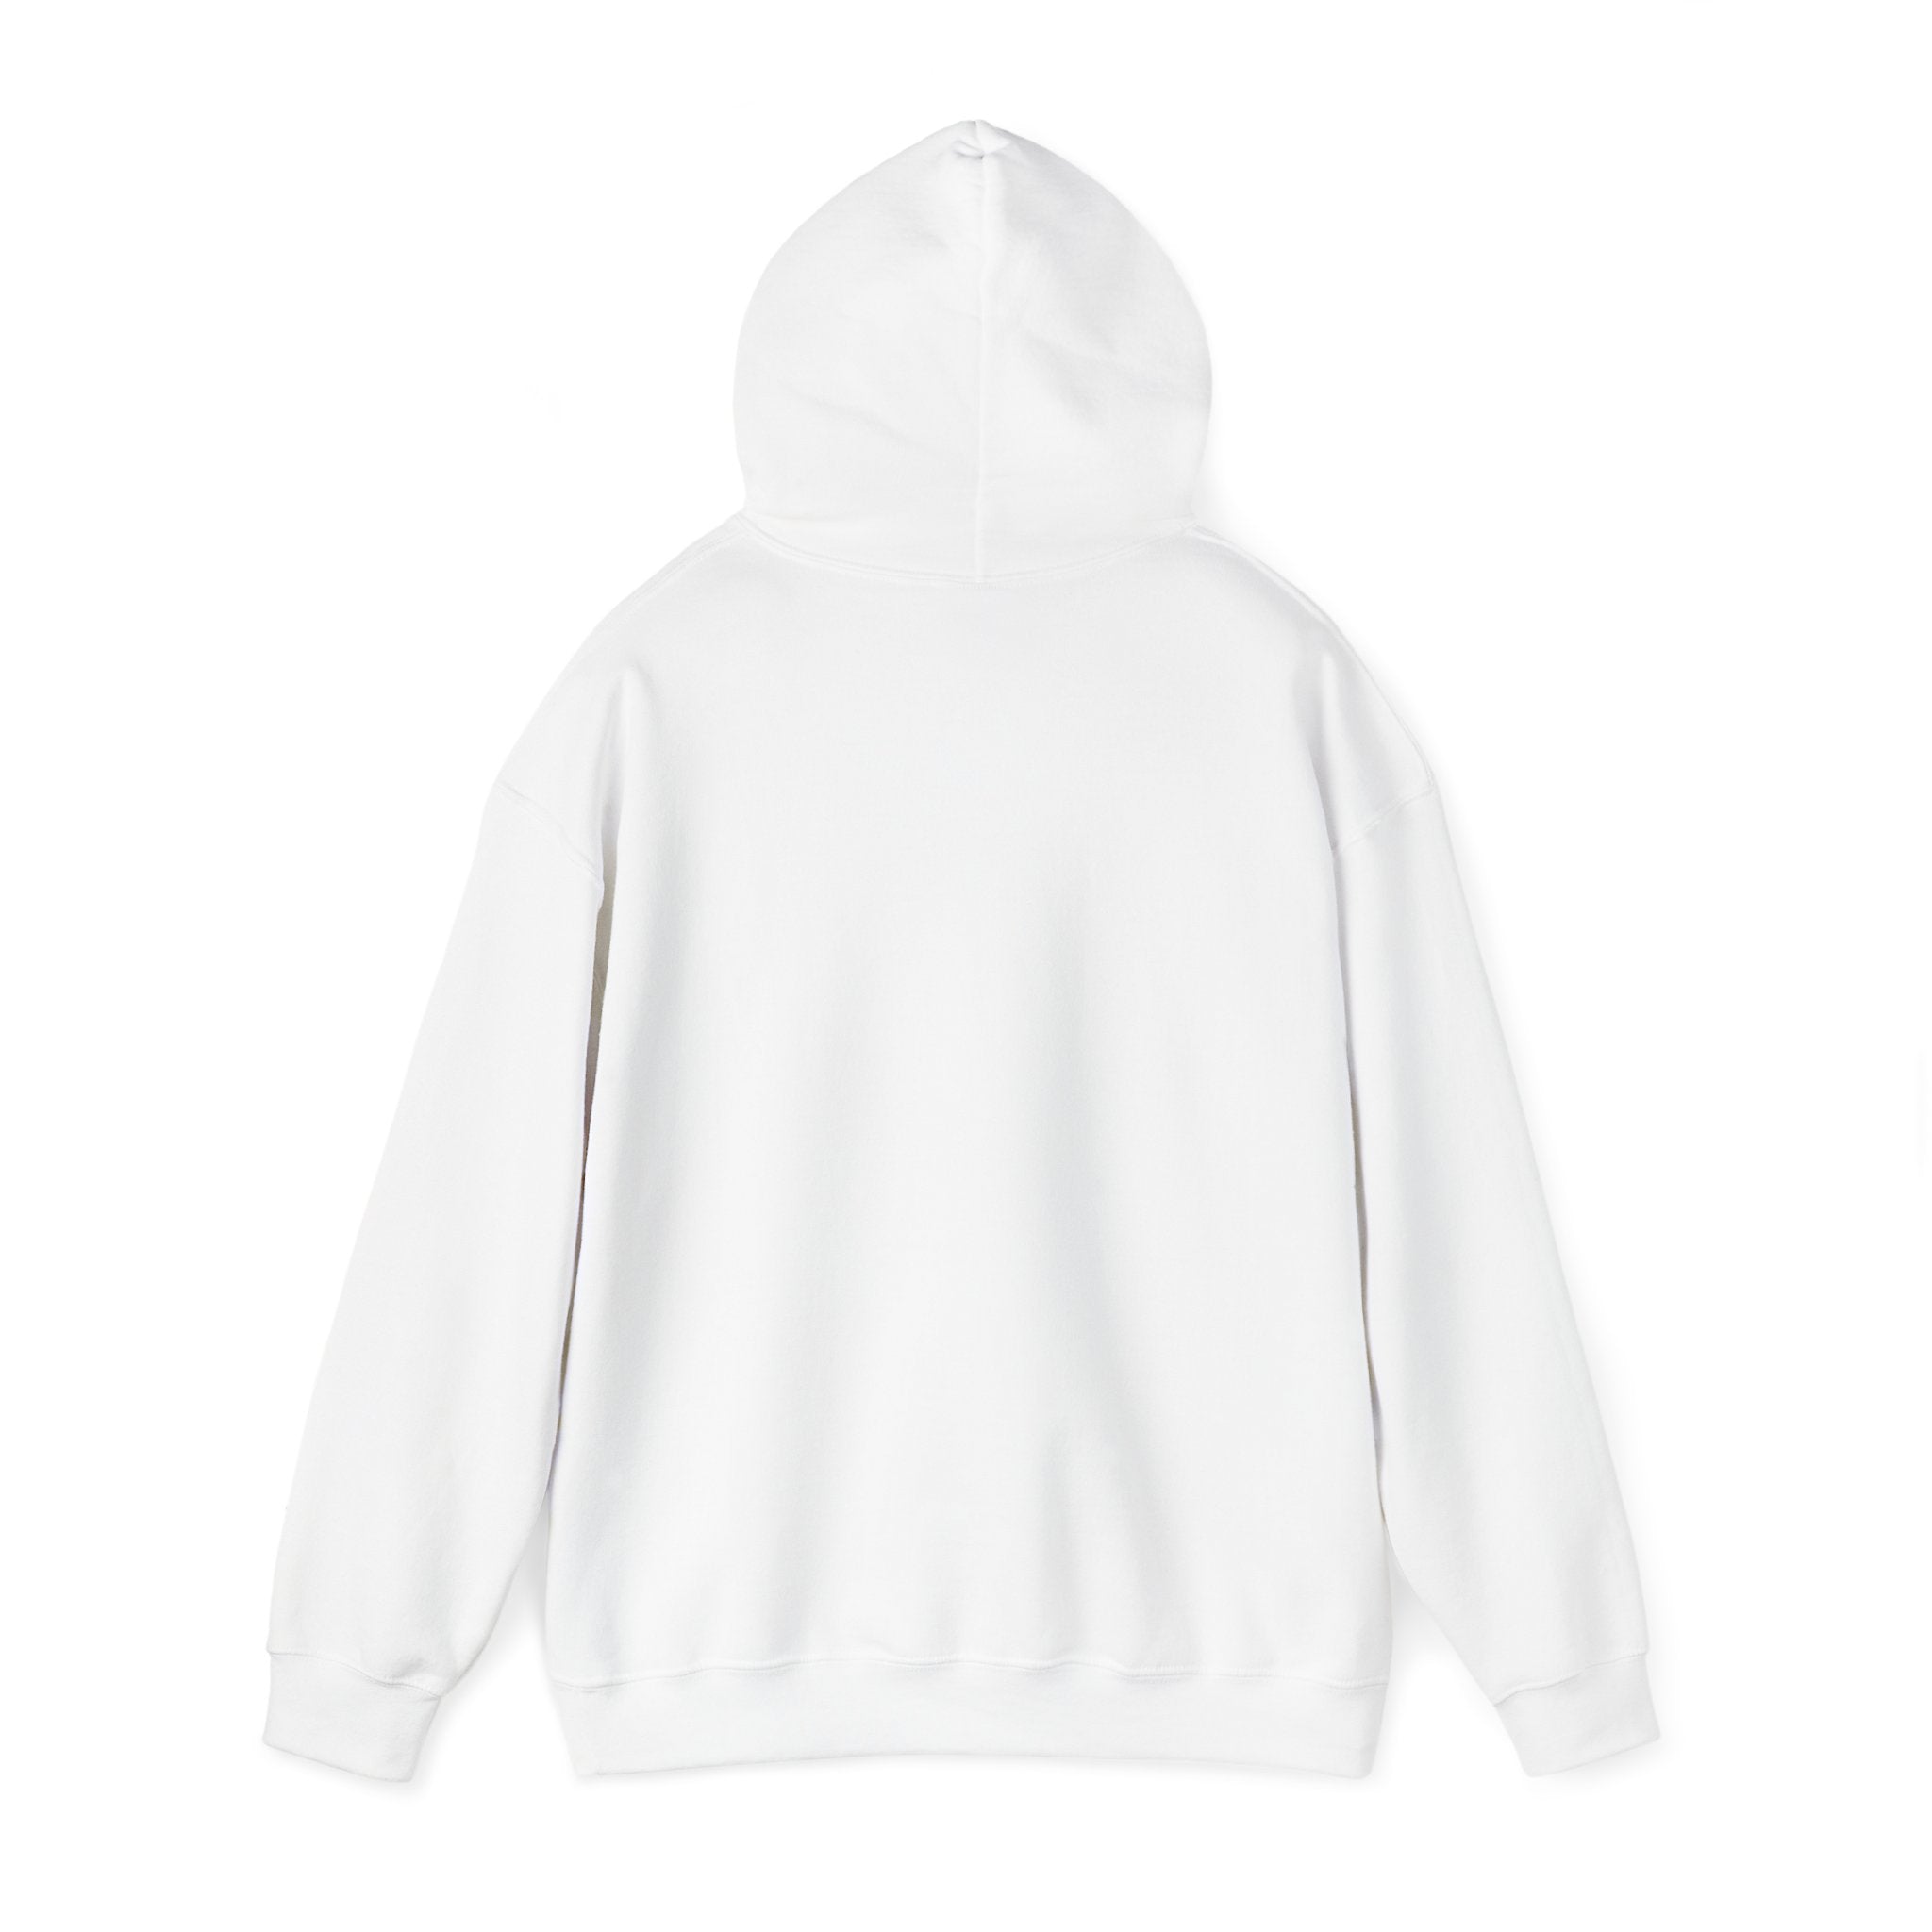 A plain white C-Ho-Co-La-Te - Hooded Sweatshirt viewed from the back, featuring a subtle C-Ho-Co-La-Te design for a fashion-forward look.